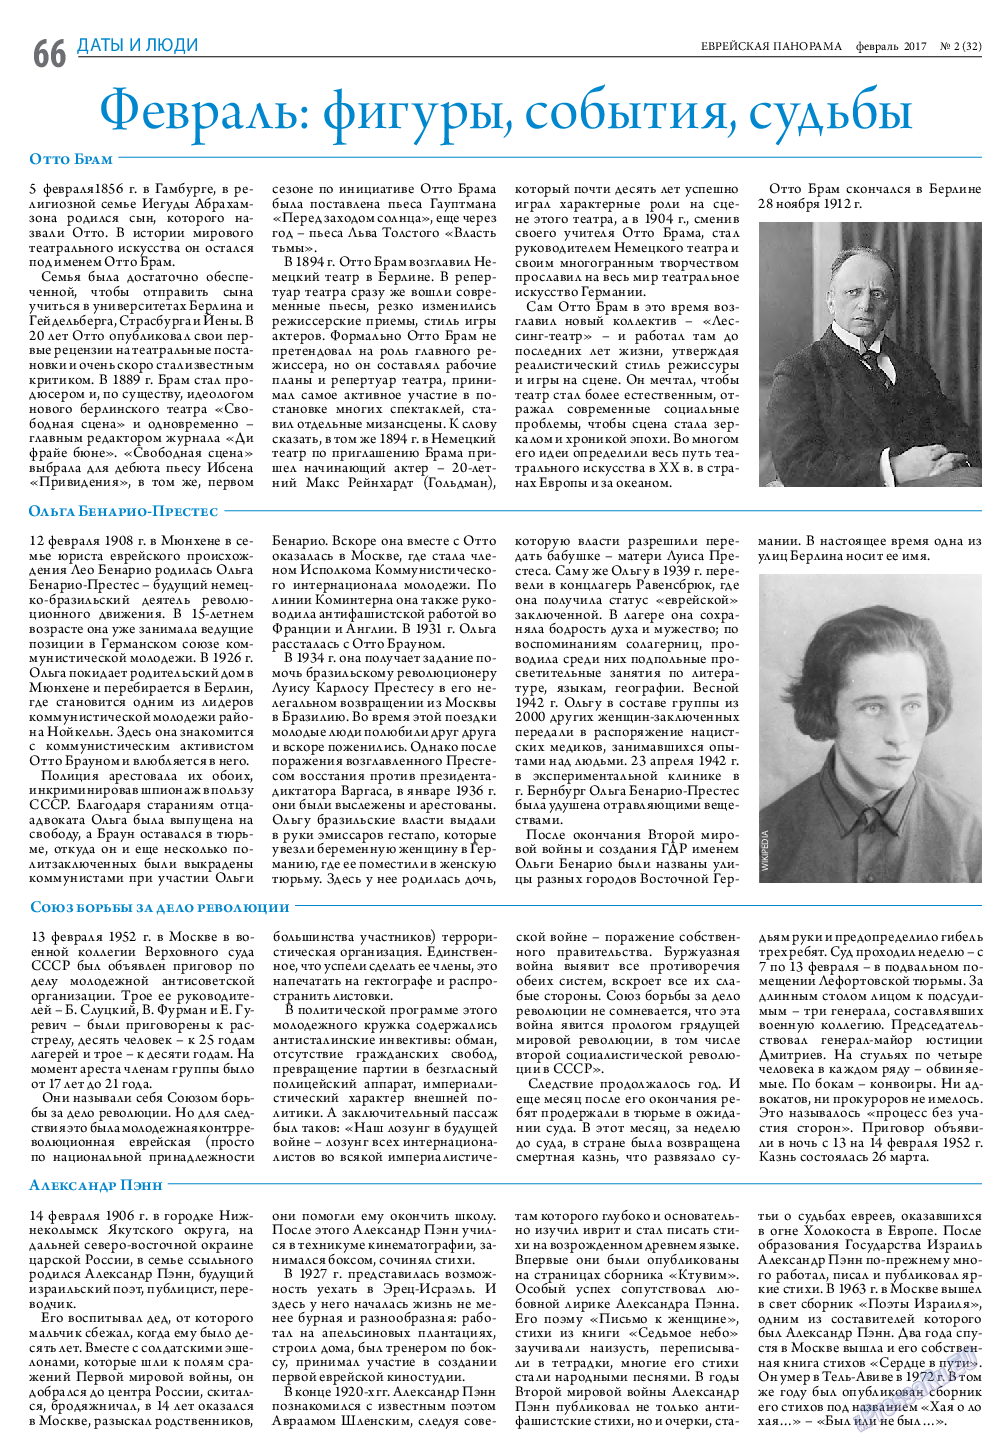 Еврейская панорама, газета. 2017 №2 стр.66